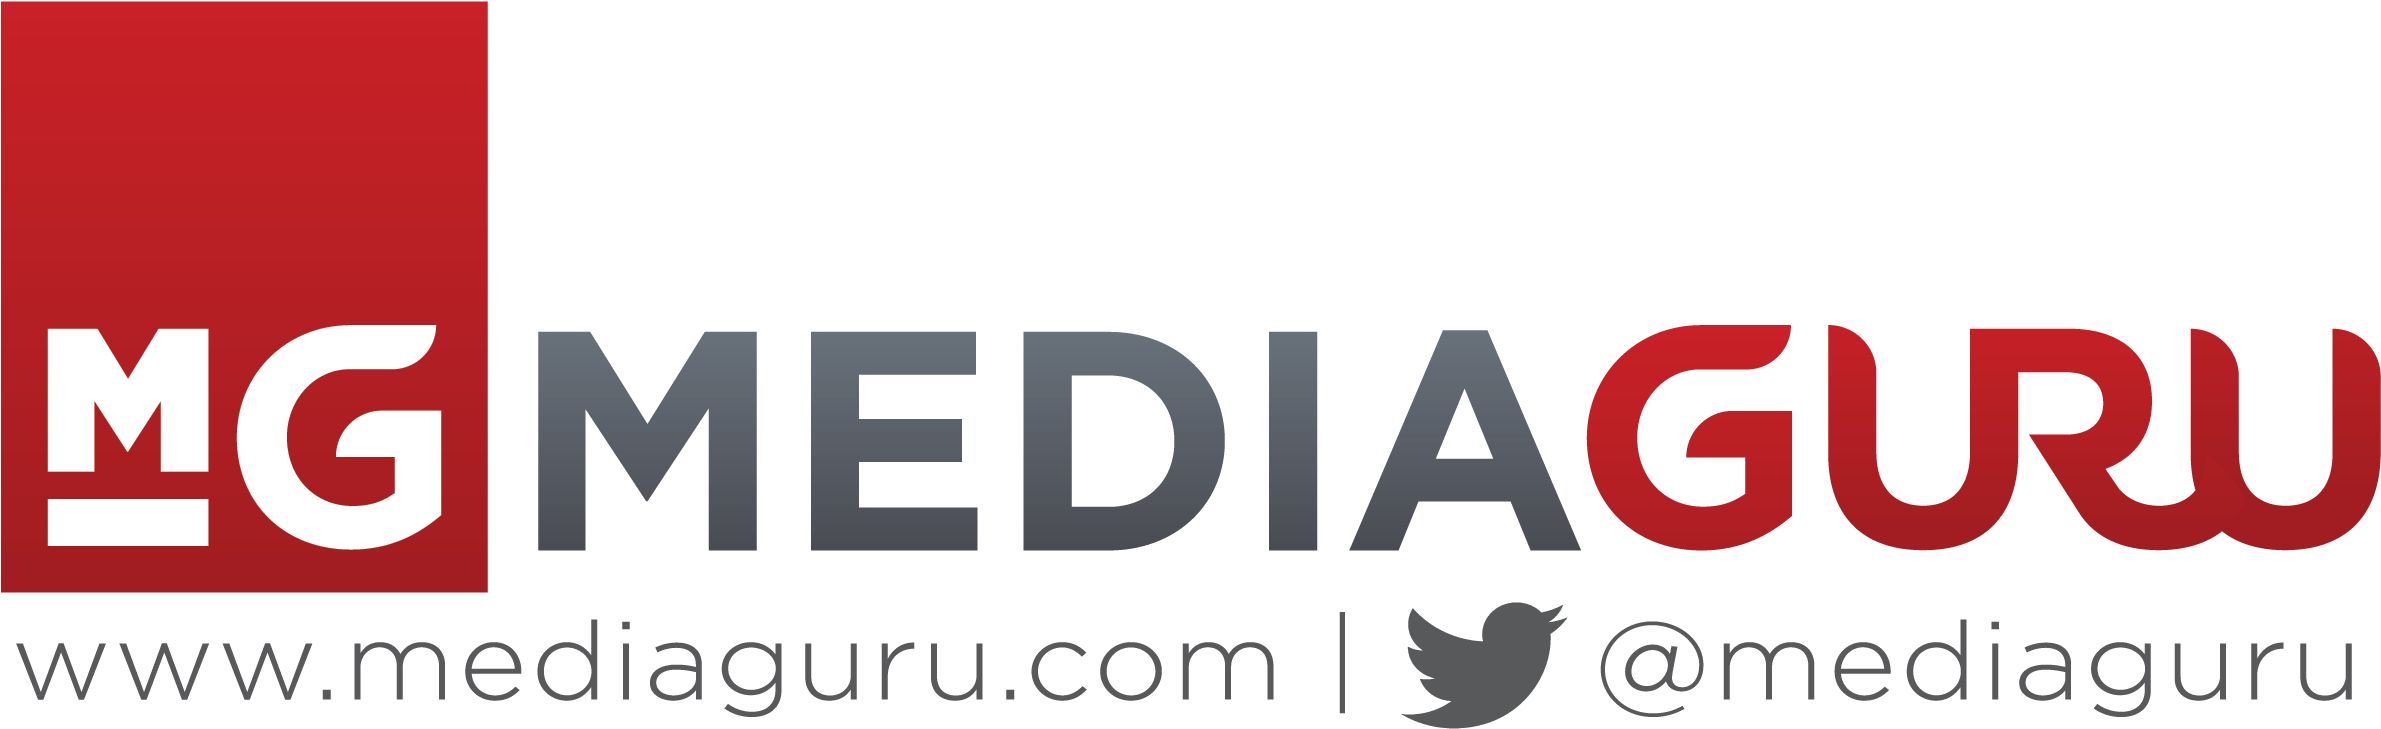 Mediaguru Is A Leading Global Media Services Company - Holmes Hap706-u Allergen Remover Mini Tower (2532x930)